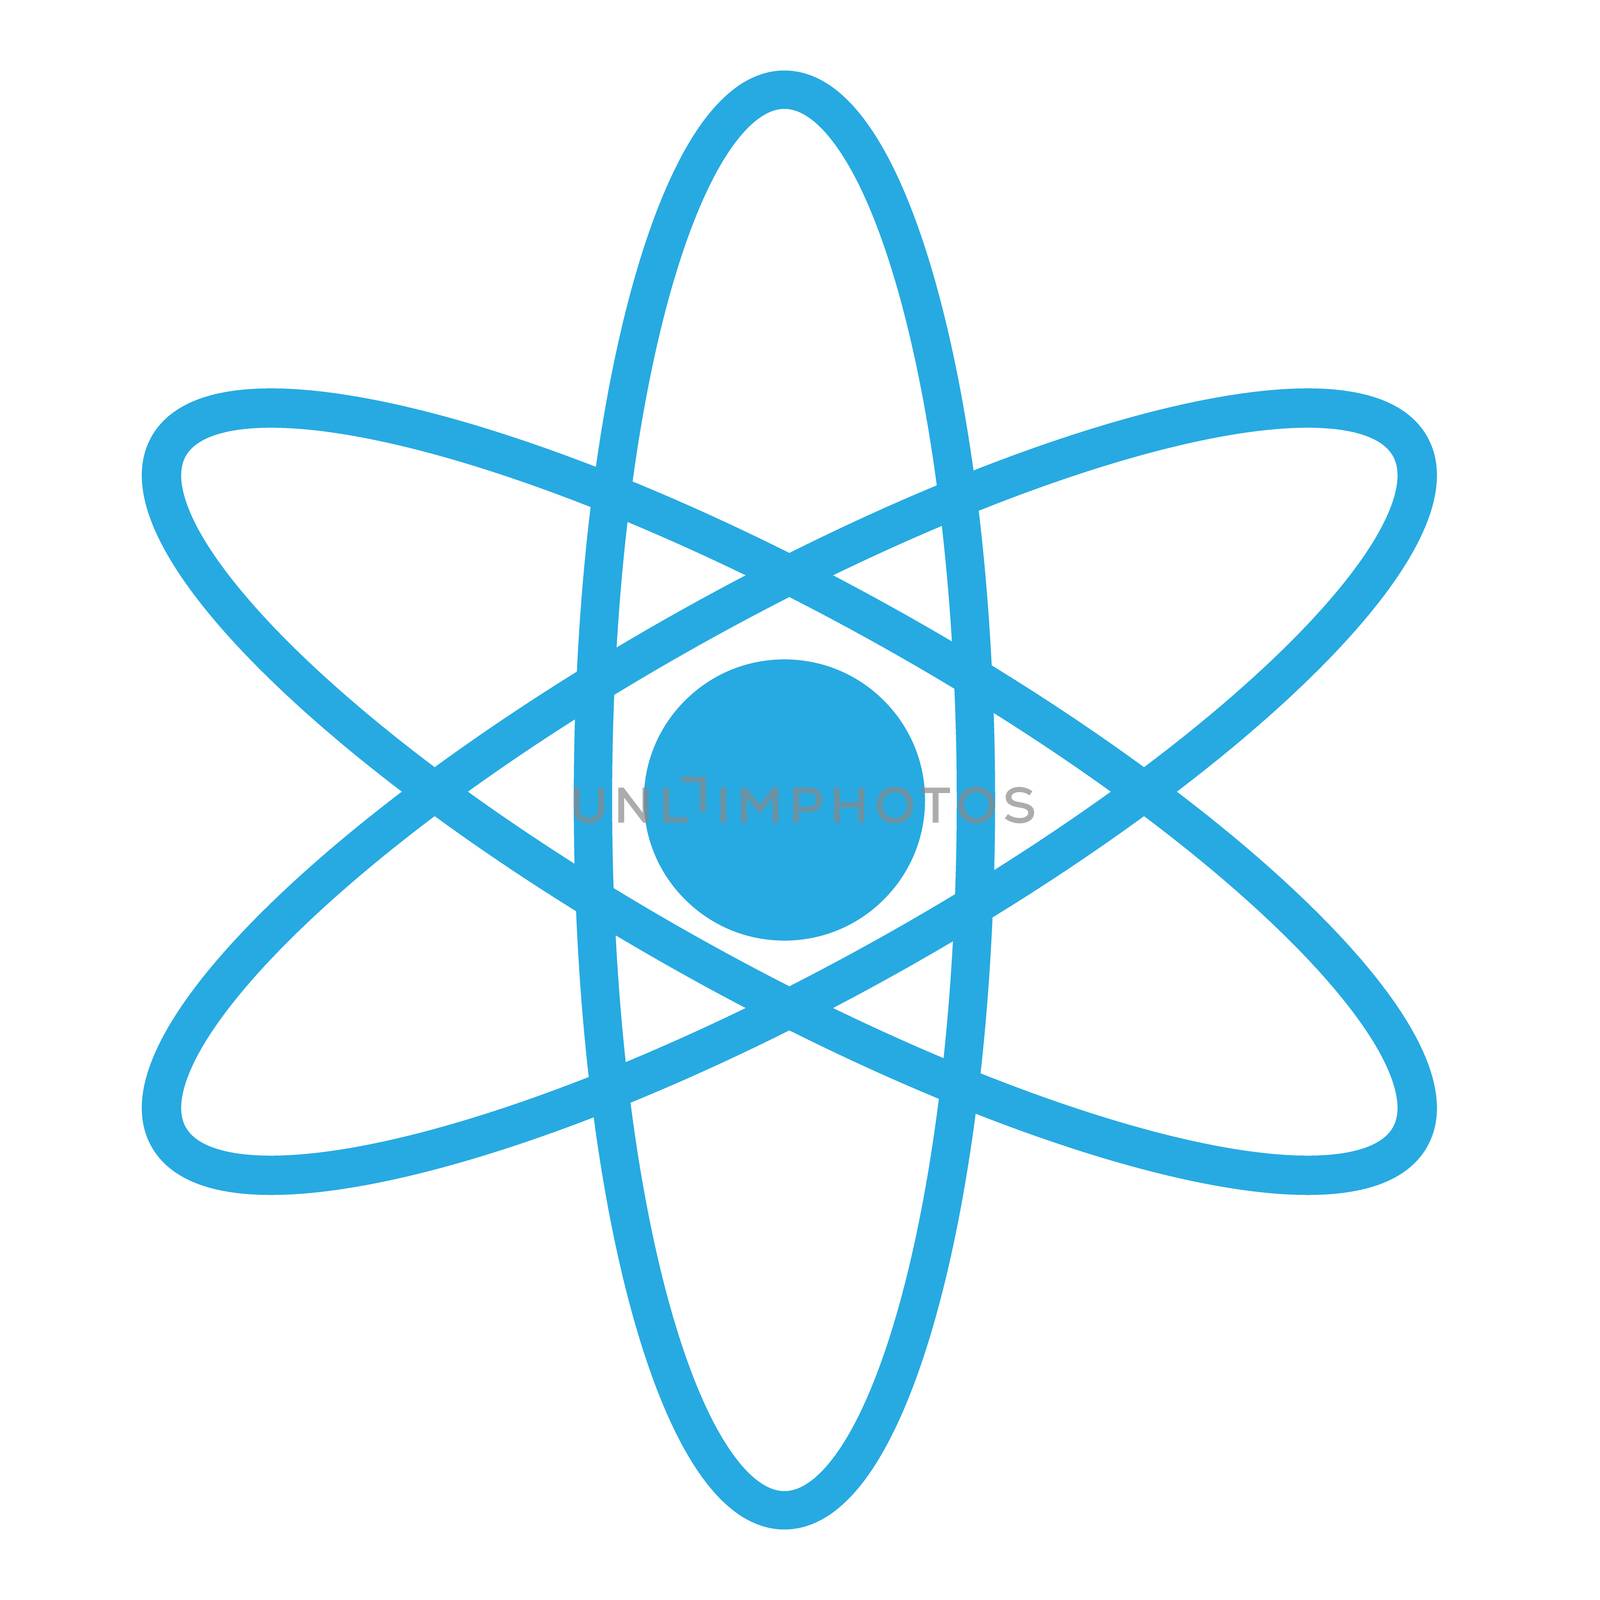 Atom icon on white background. flat style. Atom icon for your web site design, logo, app, UI. Molecule symbol. physic sign.